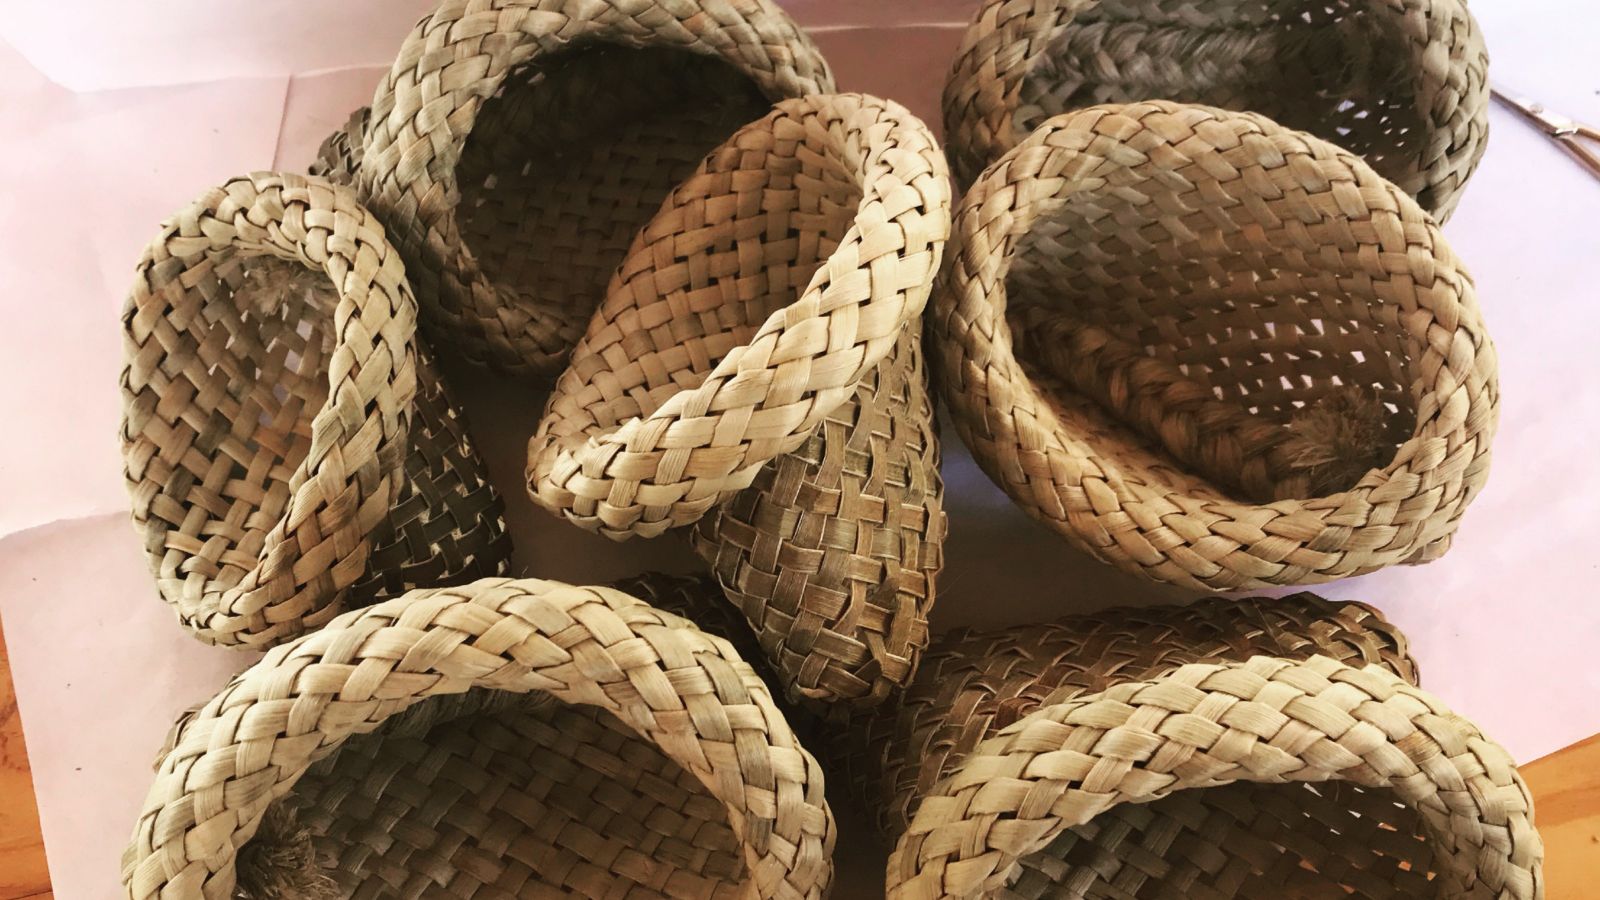 Seven tradtional Maori woven flax baskets